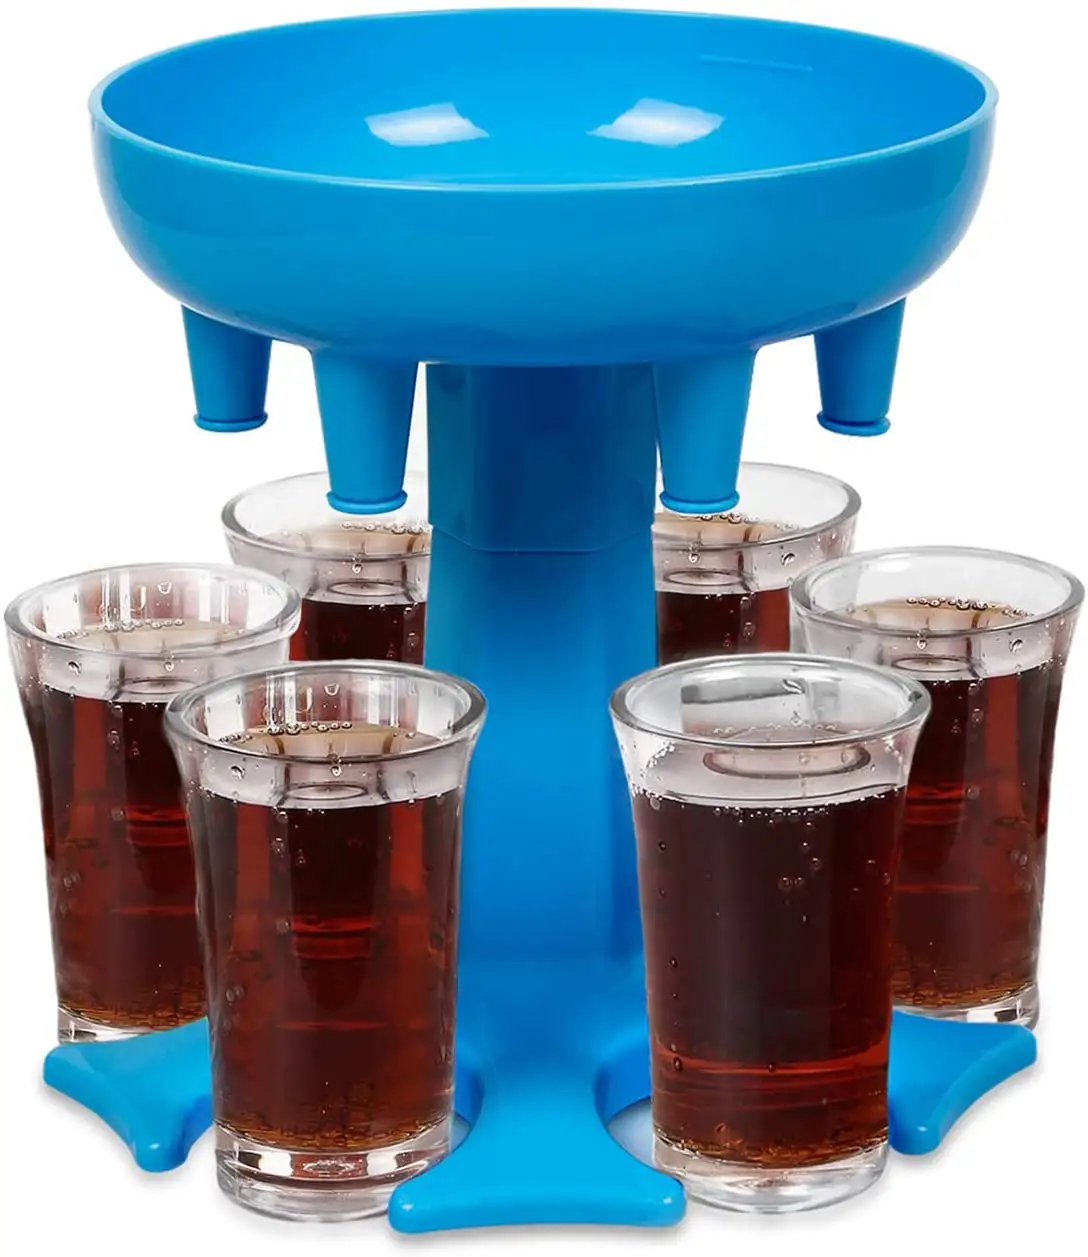 Factory Direct Drinking Games New arrival 6 Shot Glass Dispenser and holder sets for filling up 6 shot glasses